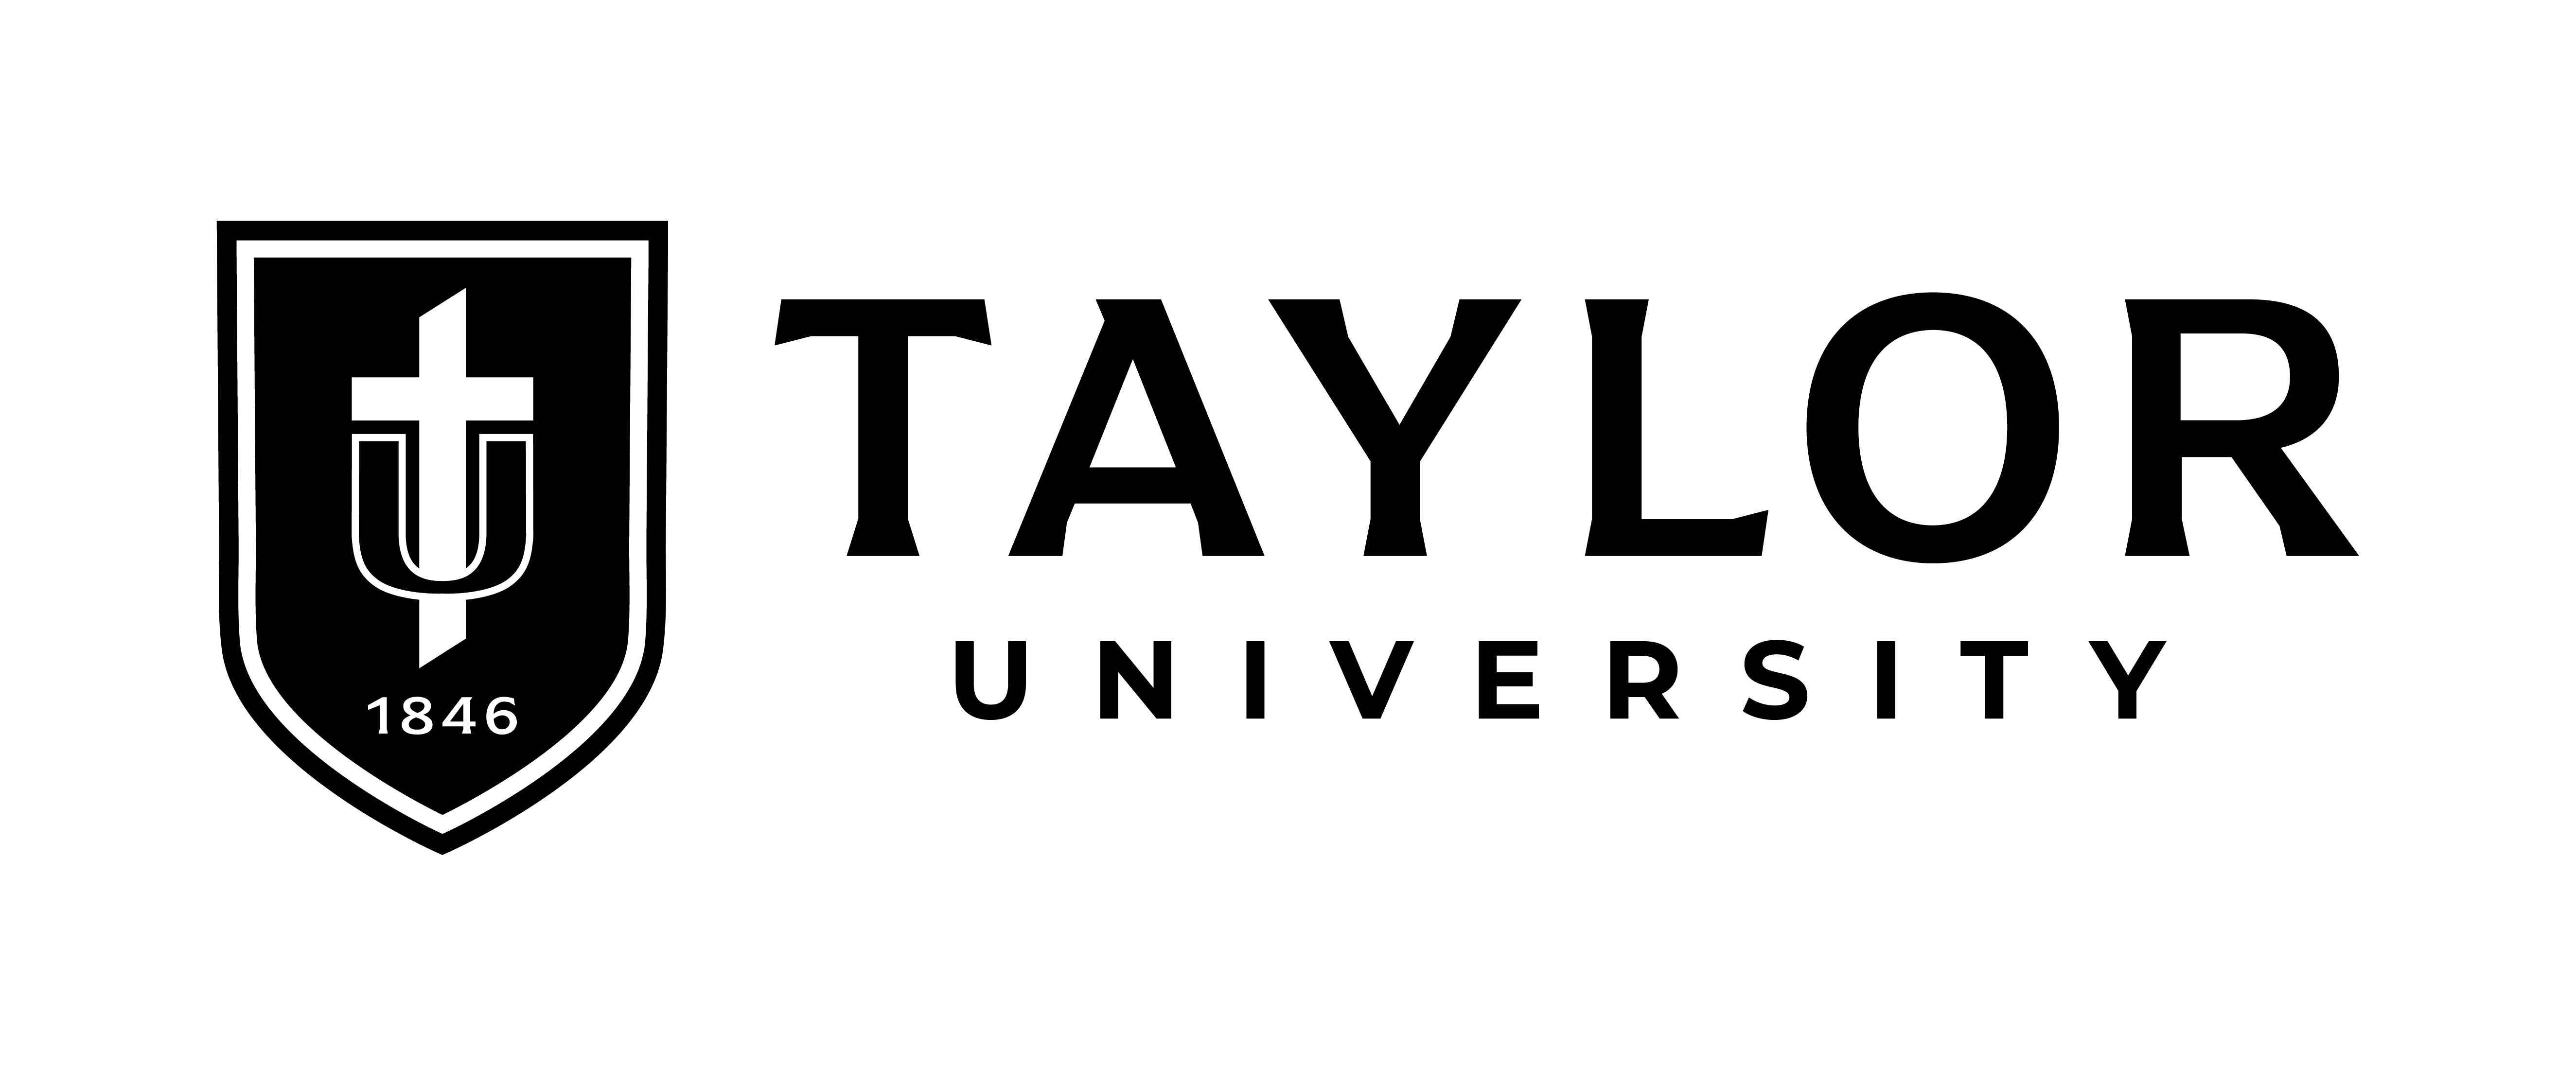 black logo